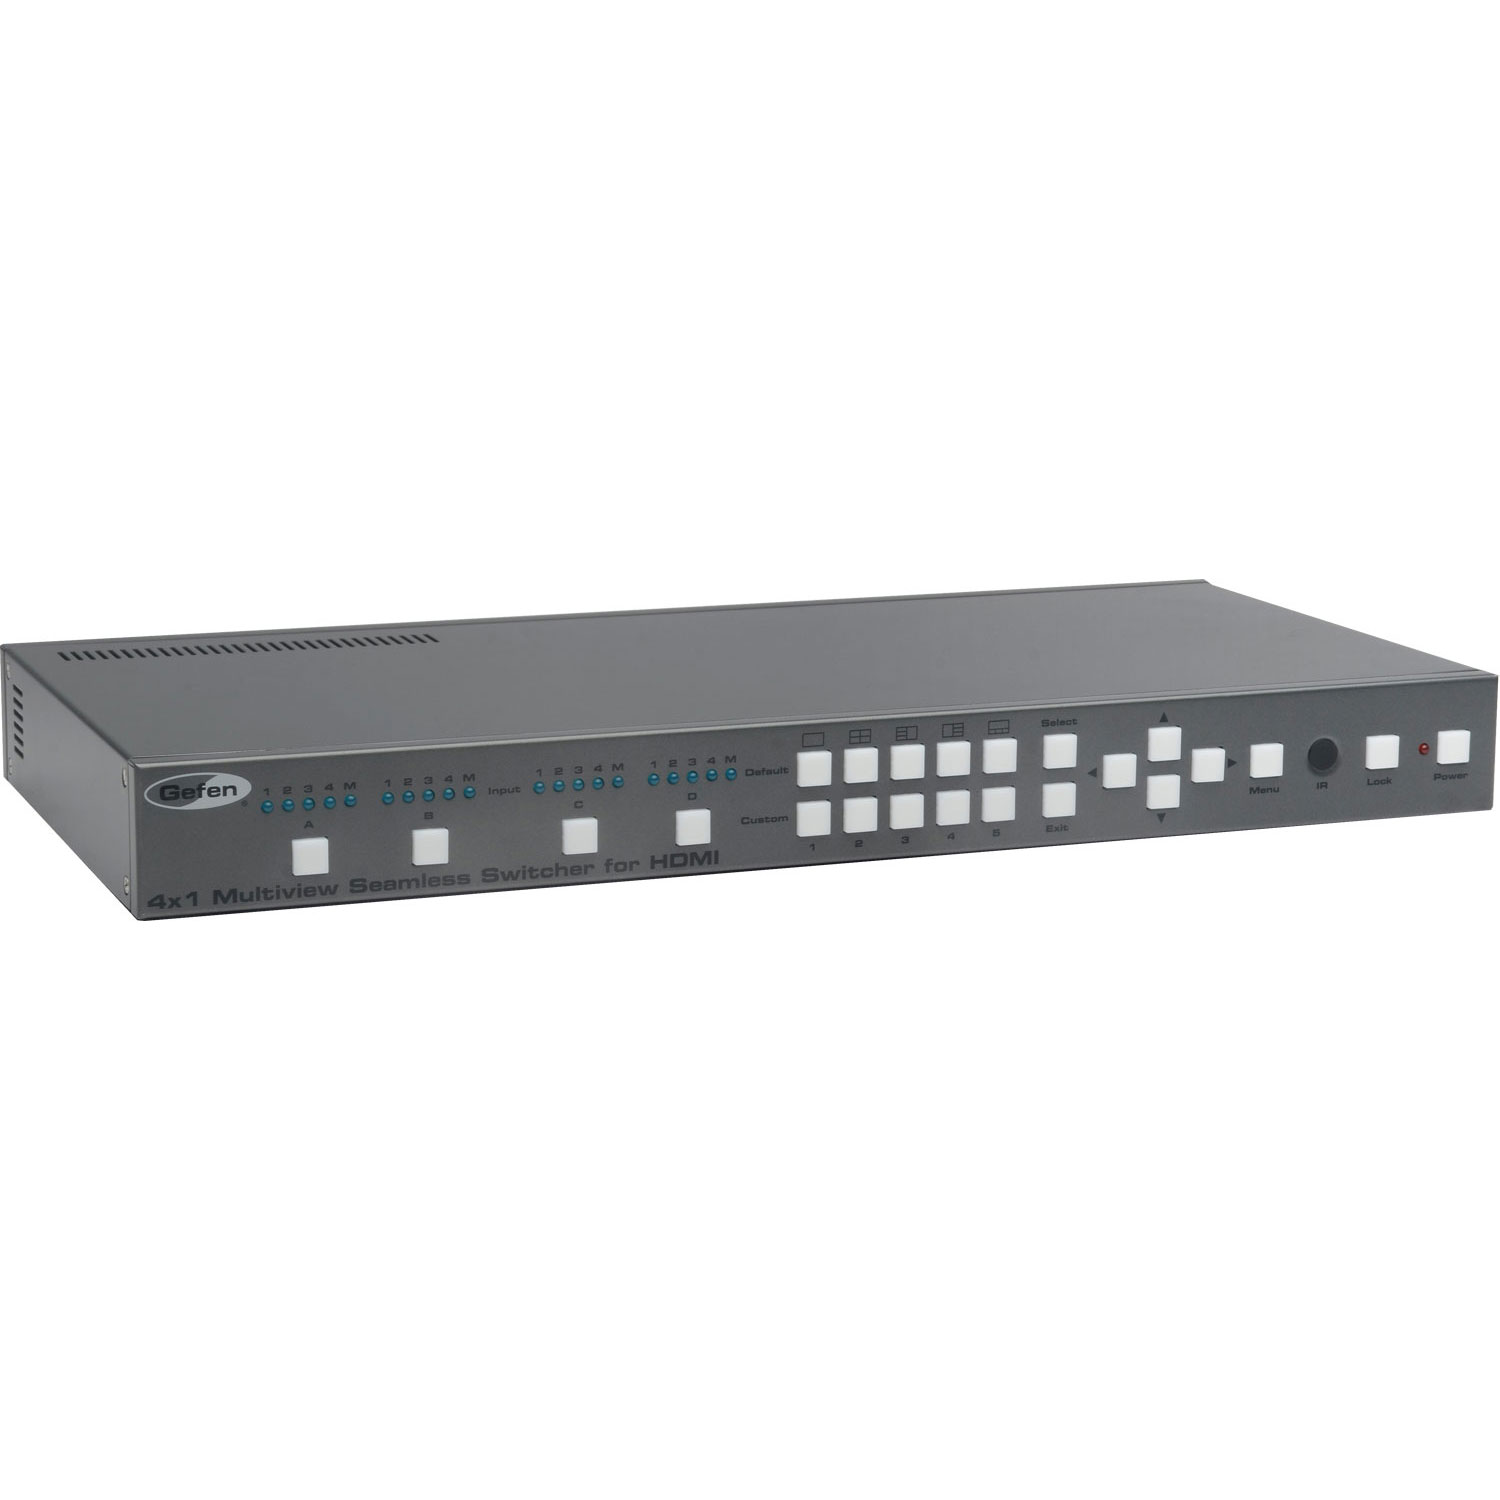 Gefen 4x1 Multiview Seamless Switcher for HDMI #EXT-HD-MVSL-441 